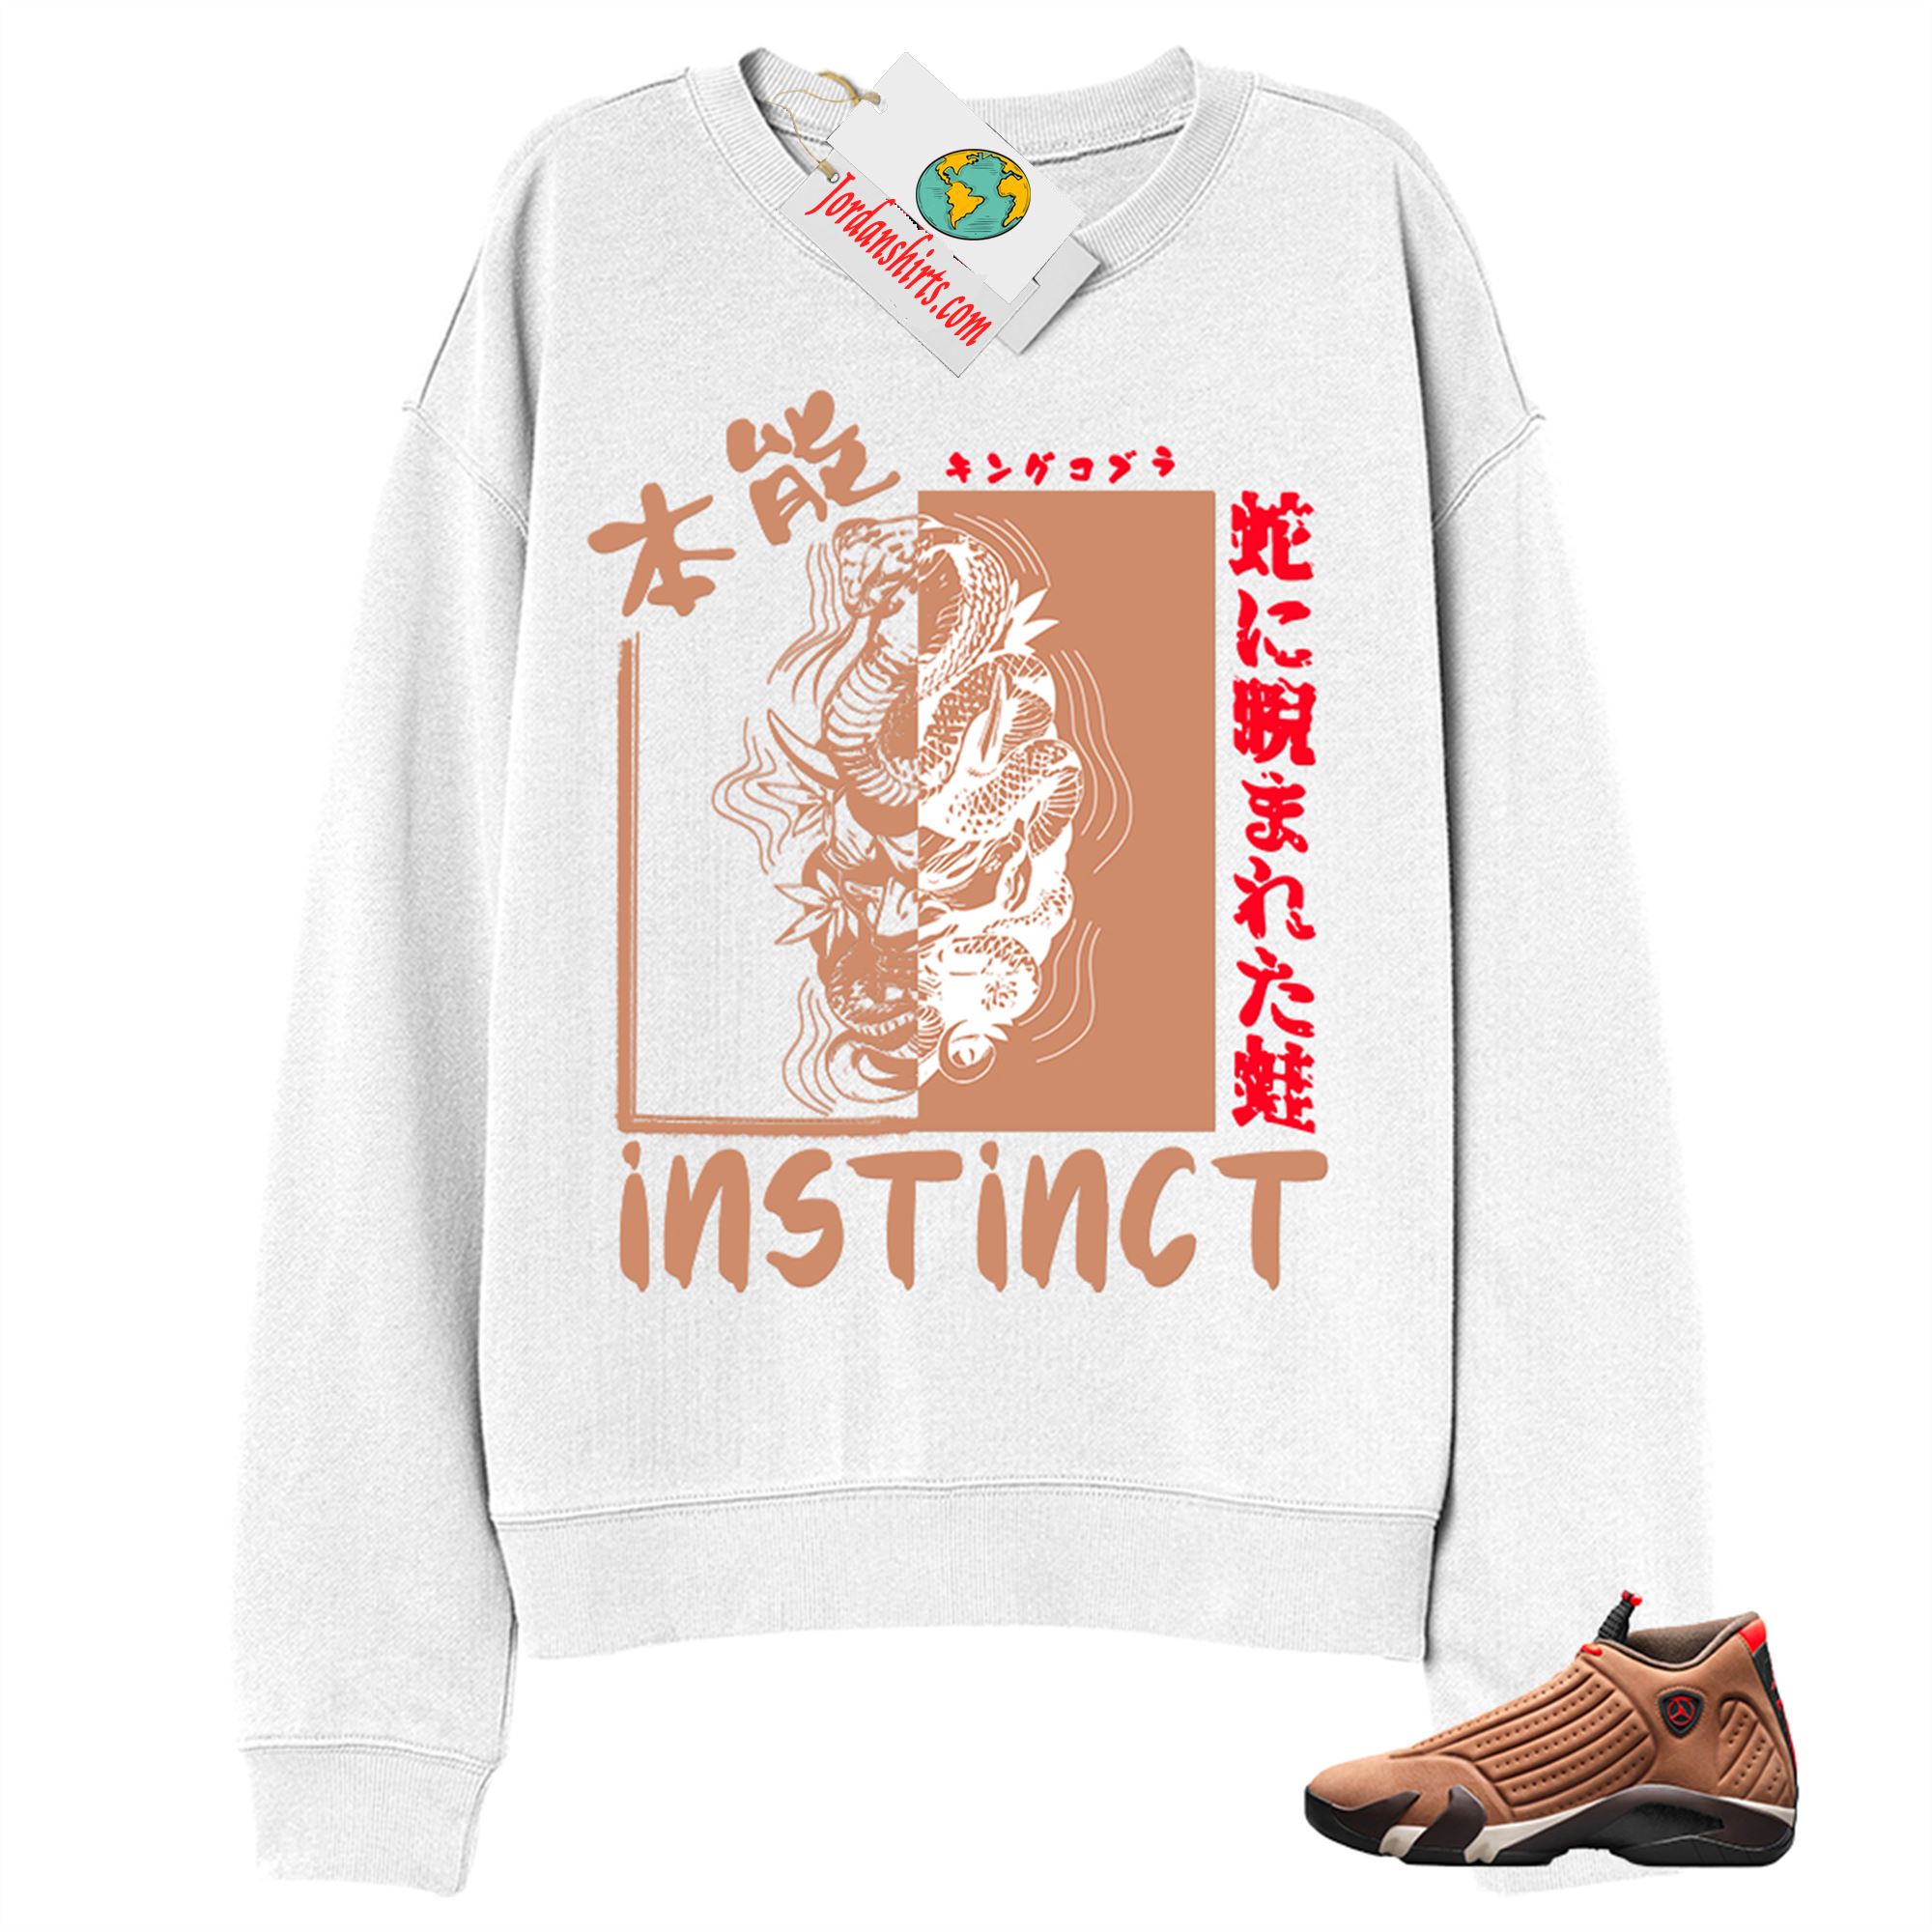 Jordan 14 Sweatshirt, Instinct Fearless Snake White Sweatshirt Air Jordan 14 Winterized 14s Plus Size Up To 5xl